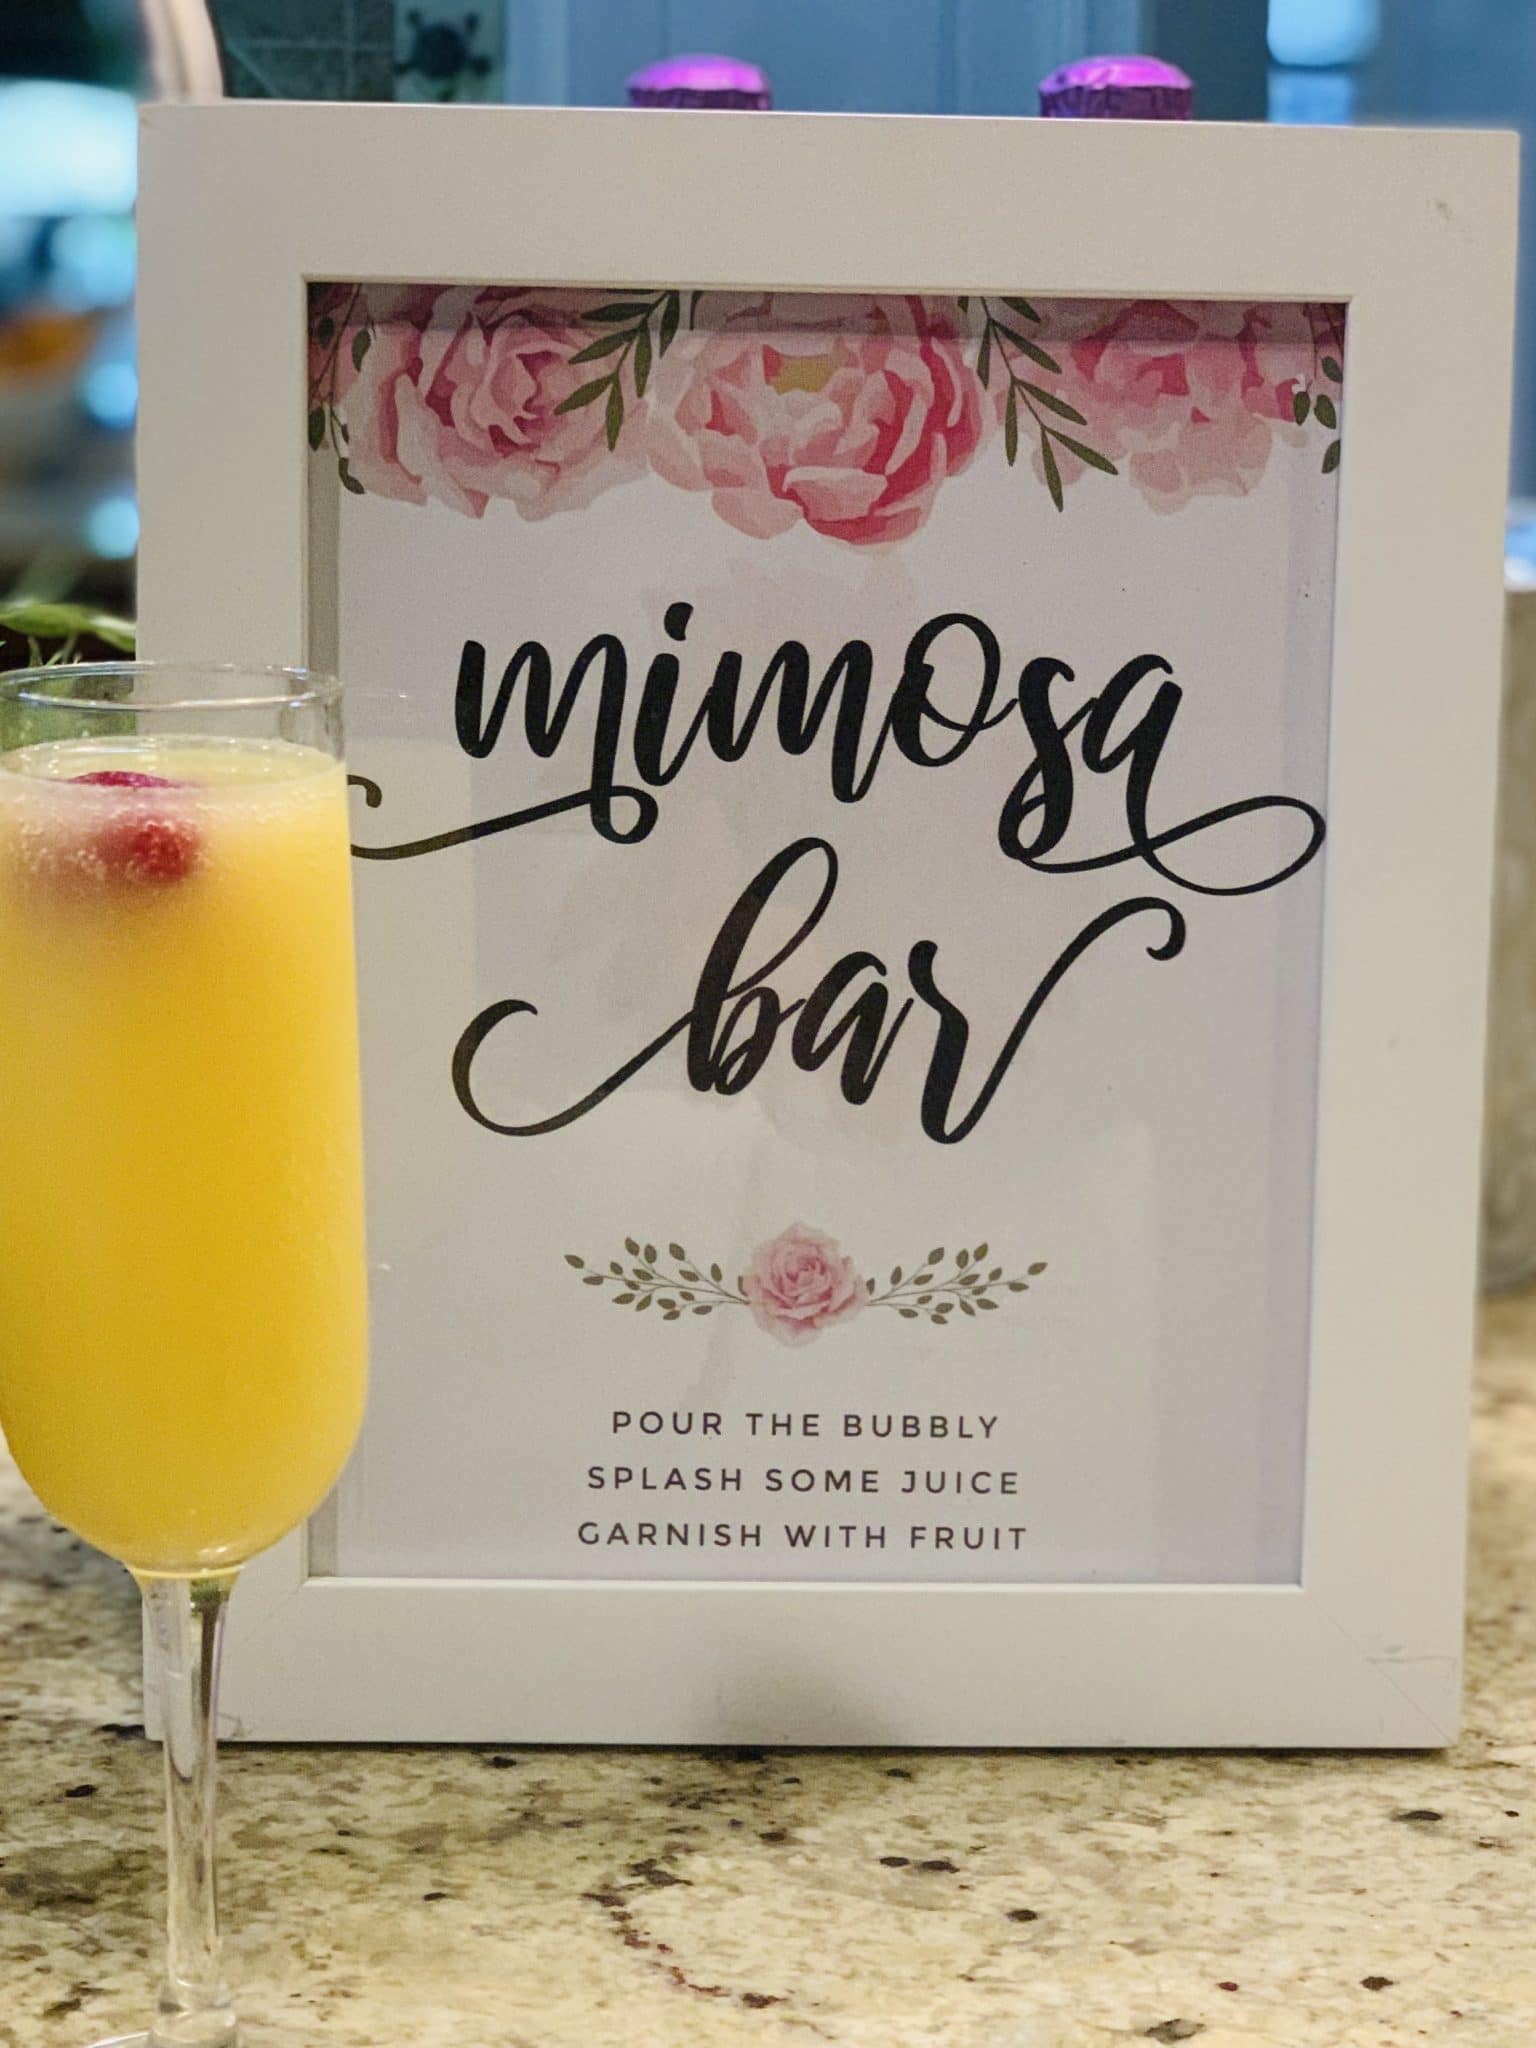 Mimosa Bar Sign – Say I Do Printables